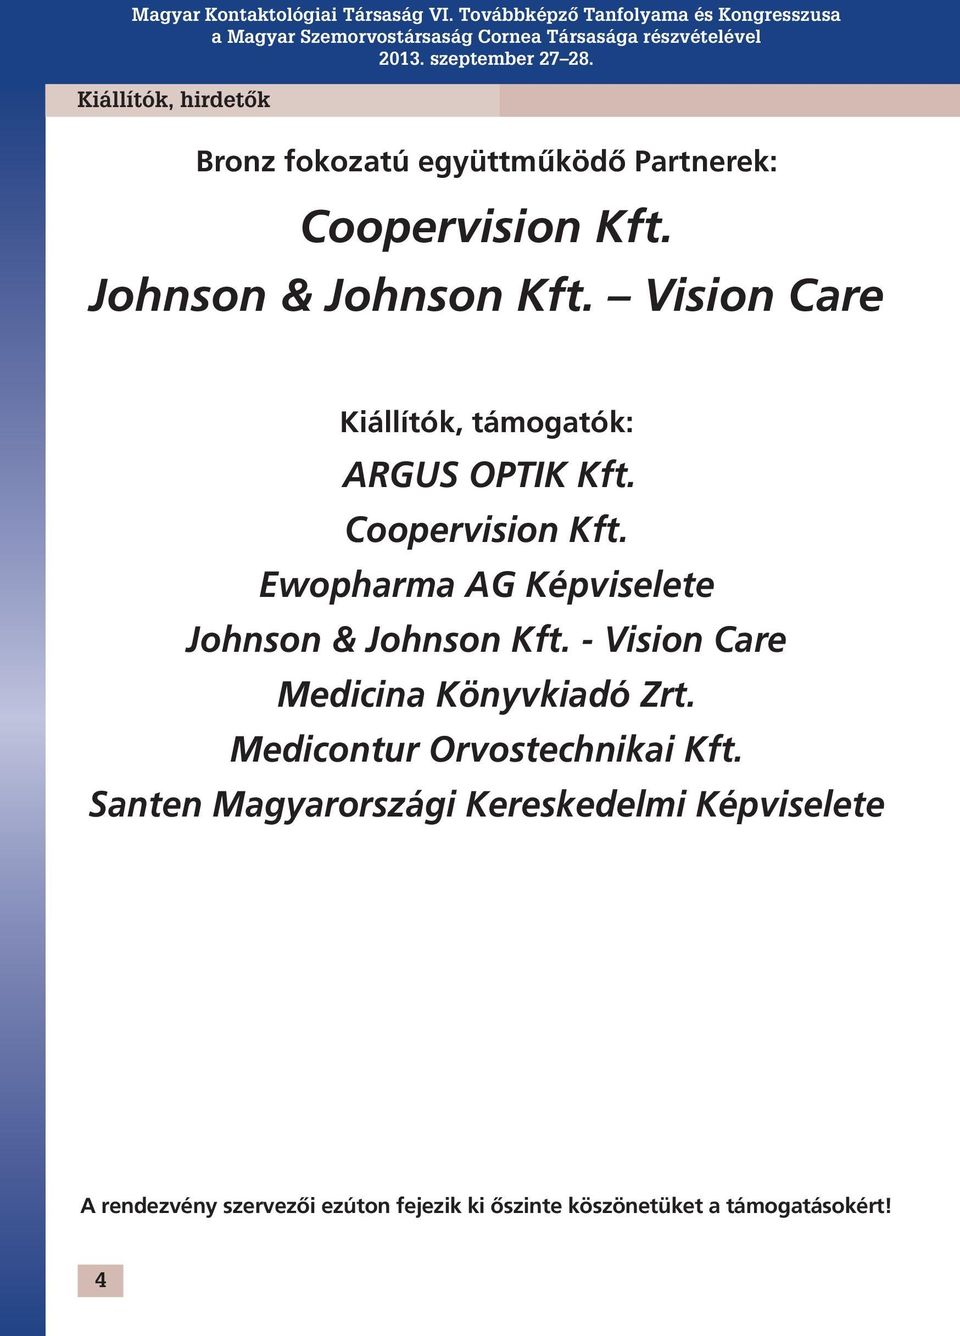 Ewopharma AG Képviselete Johnson & Johnson Kft. - Vision Care Medicina Könyvkiadó Zrt.